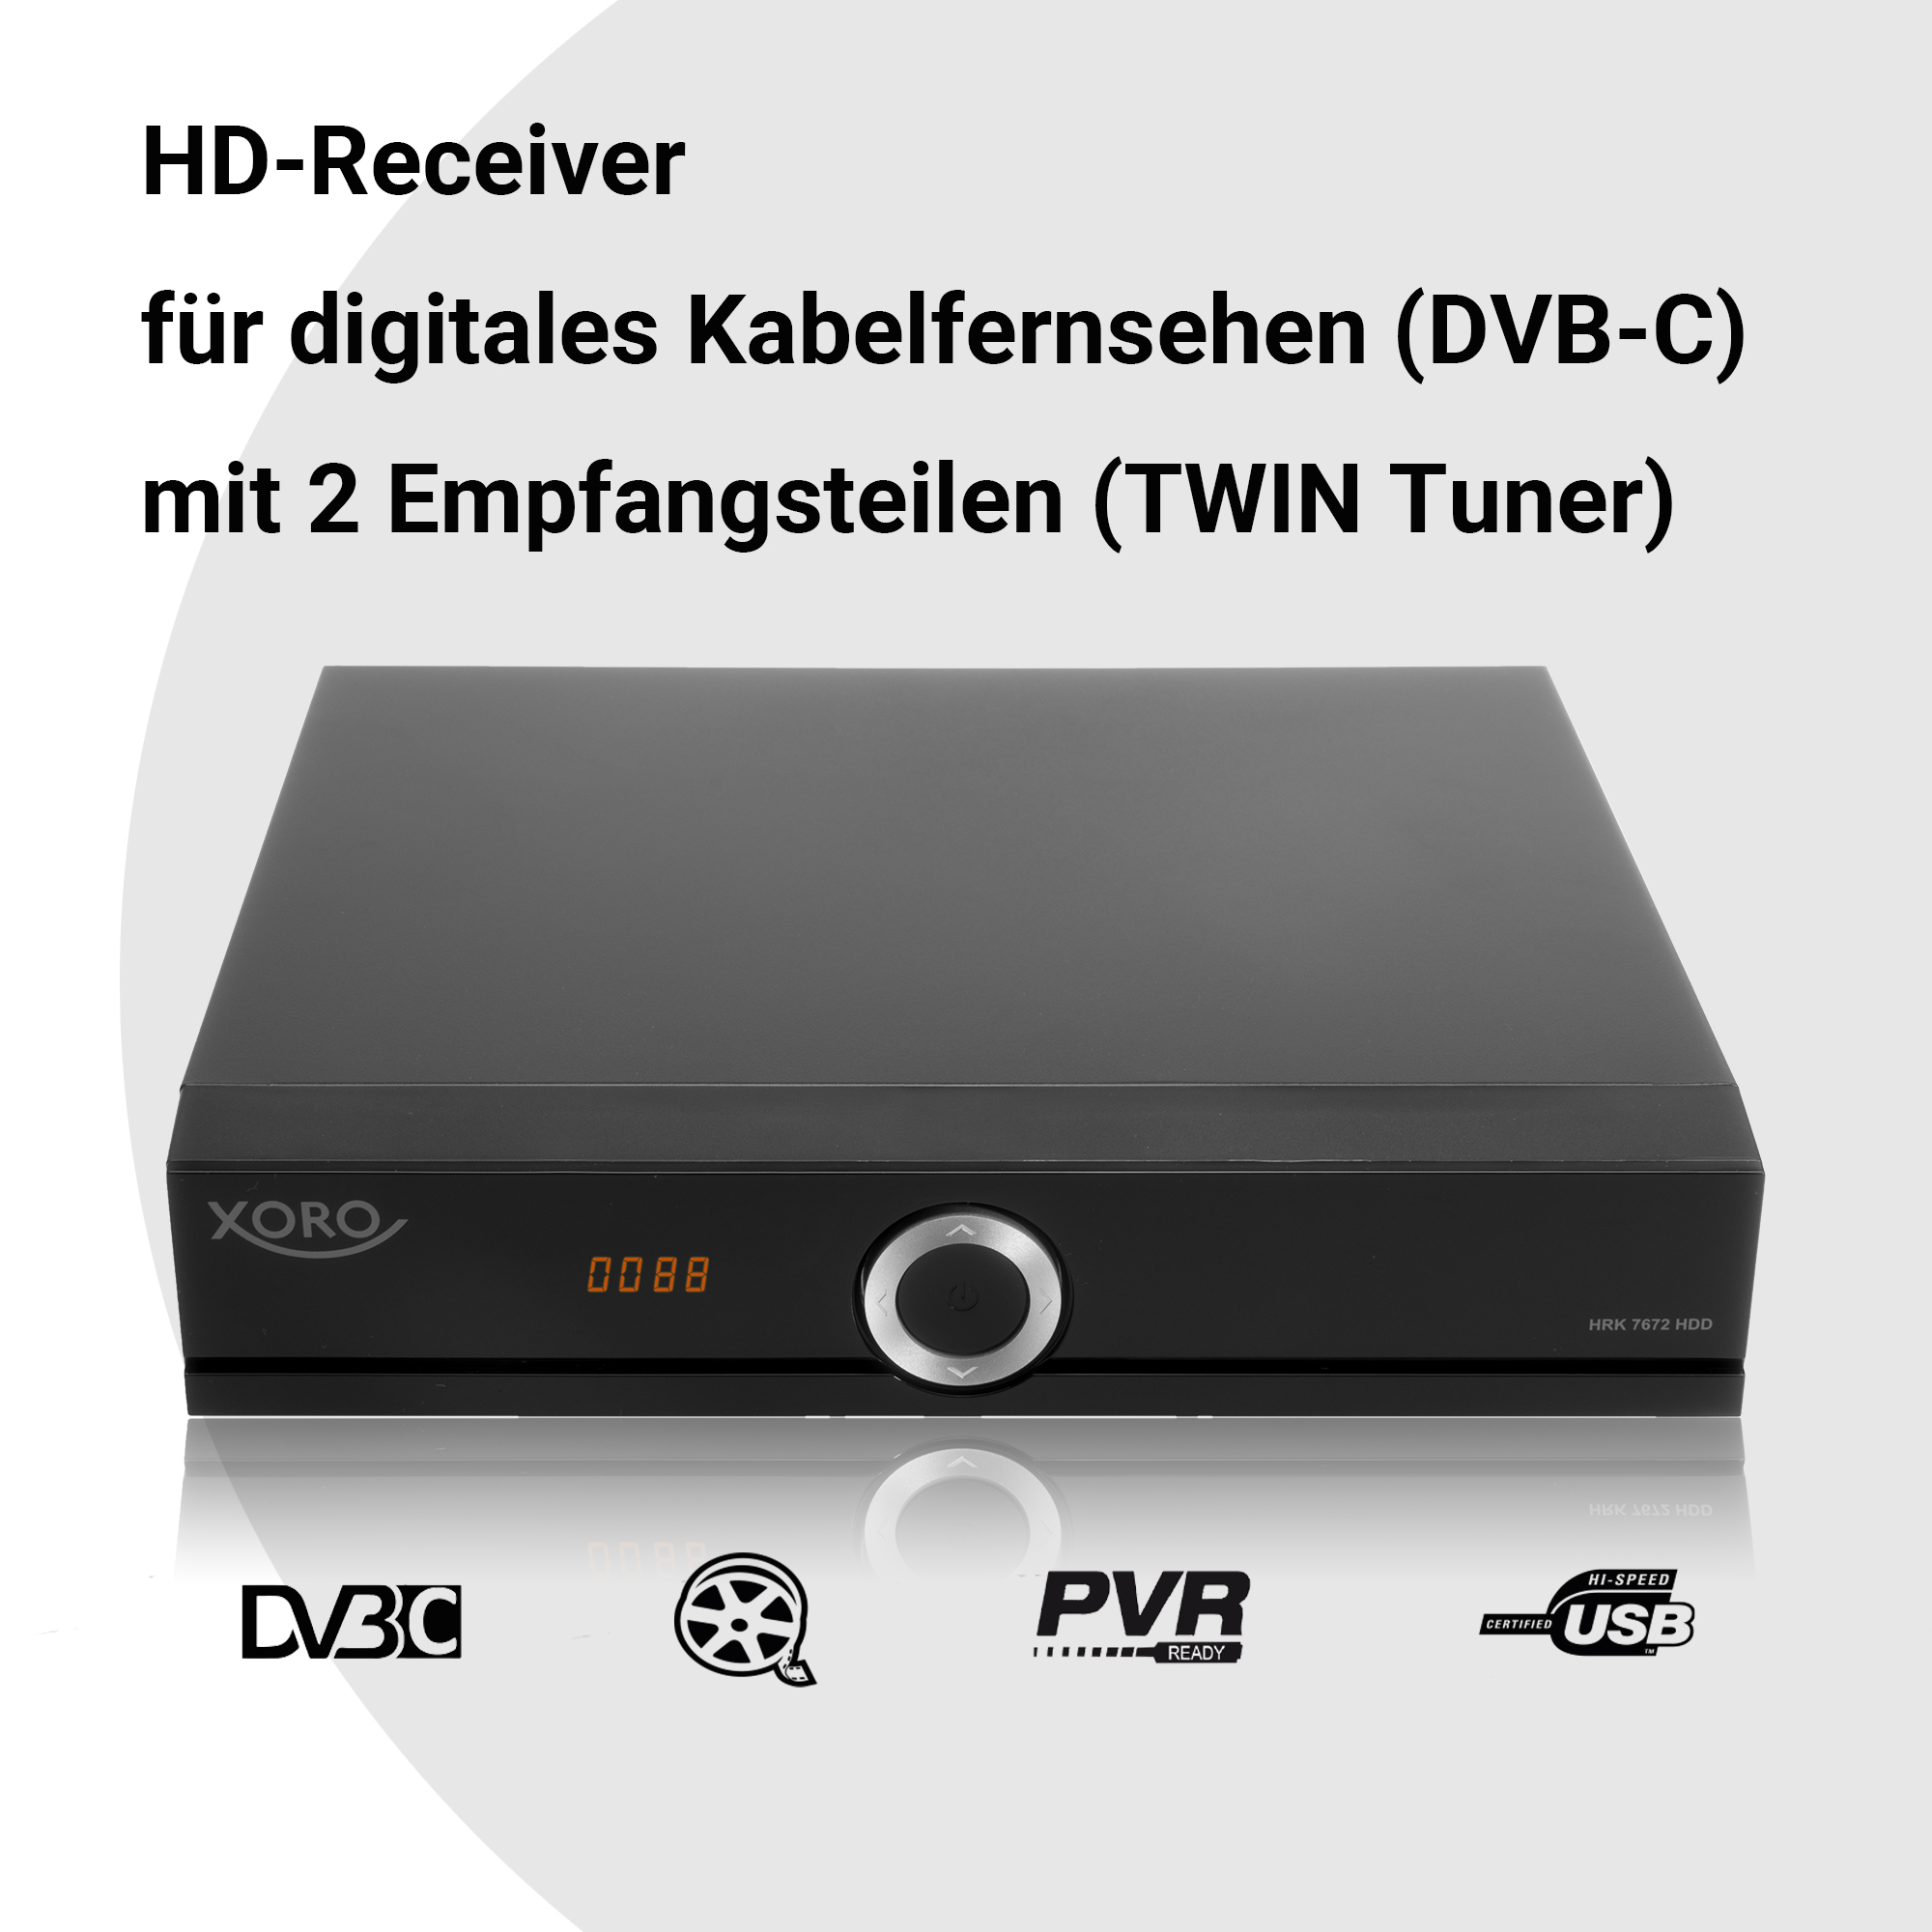 DVB-C TWIN XORO XORO Tuner, Receiver HDMI, DVB-C HD 12V) 7672 0TB MiniSCART, PVR USB (HDTV HDD Ready, Kabelreceiver HRK